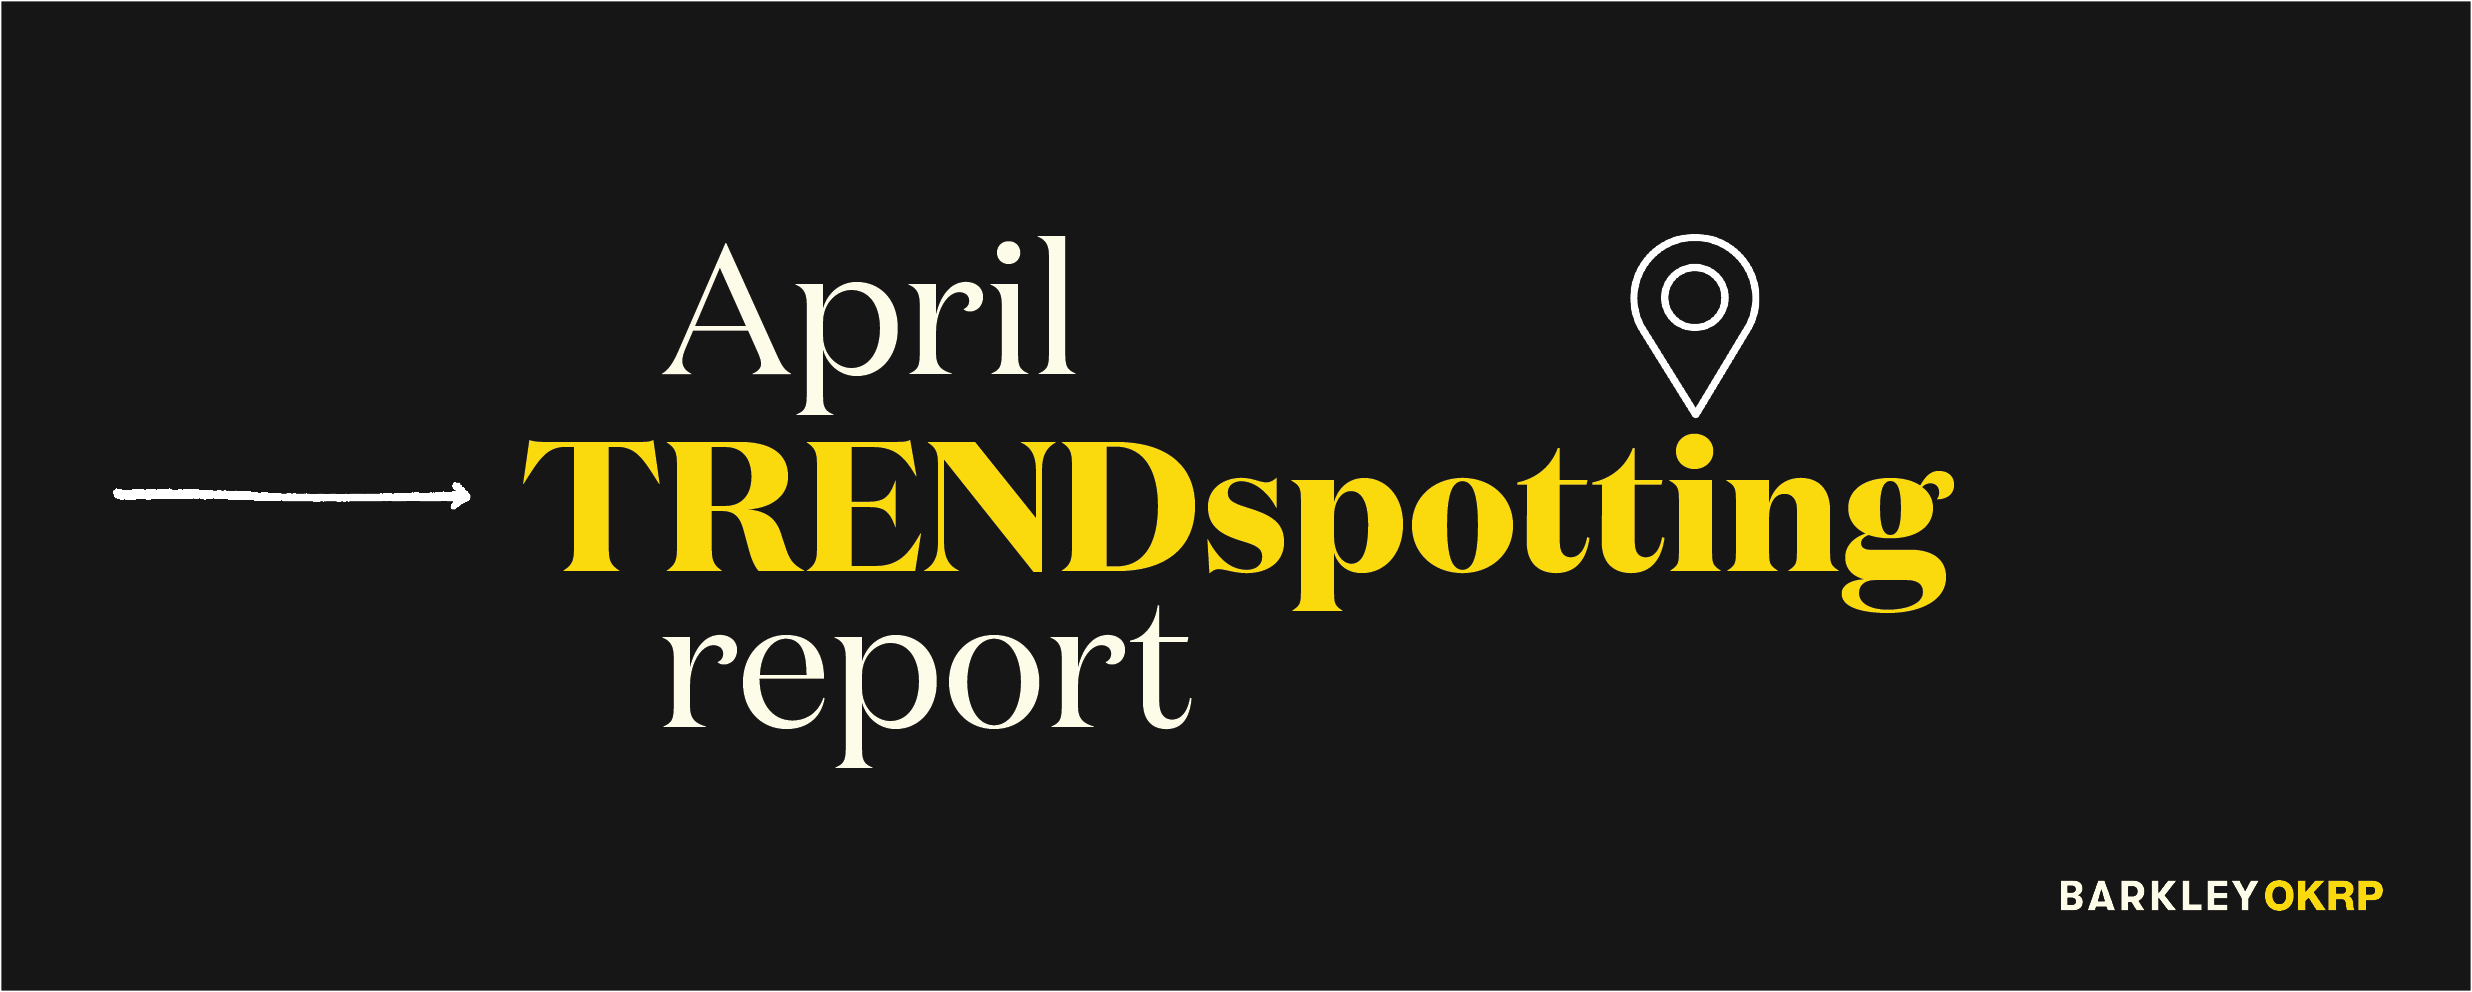 April TrendspottingReport 2470x990